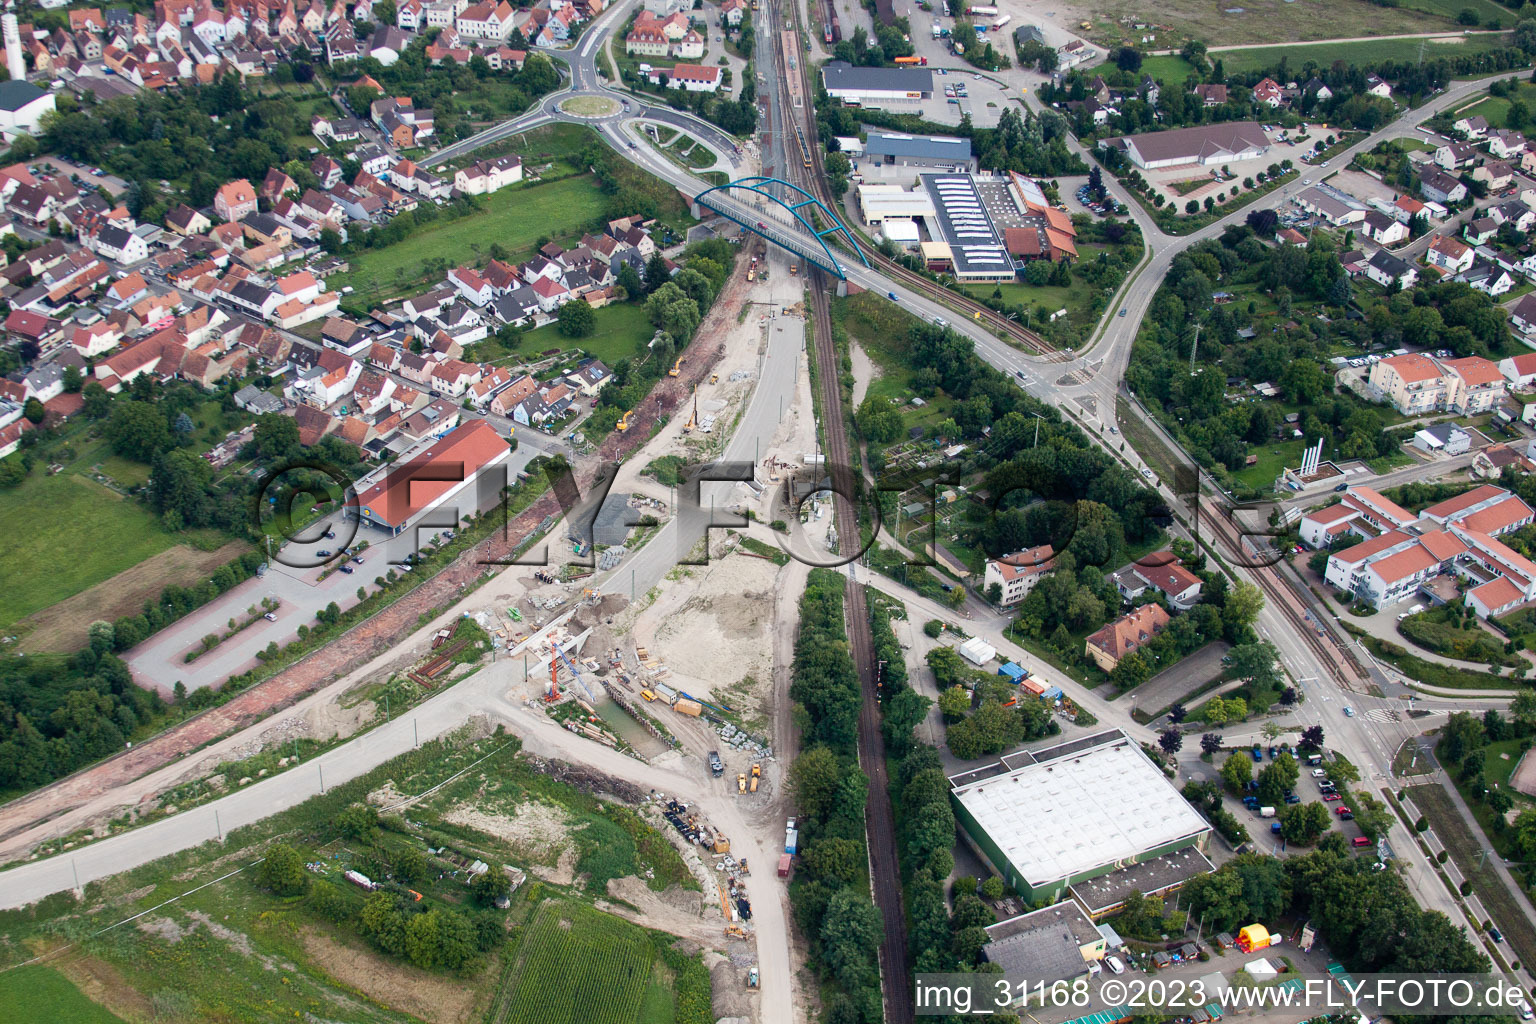 New construction of railway underpass Ottstr in Wörth am Rhein in the state Rhineland-Palatinate, Germany